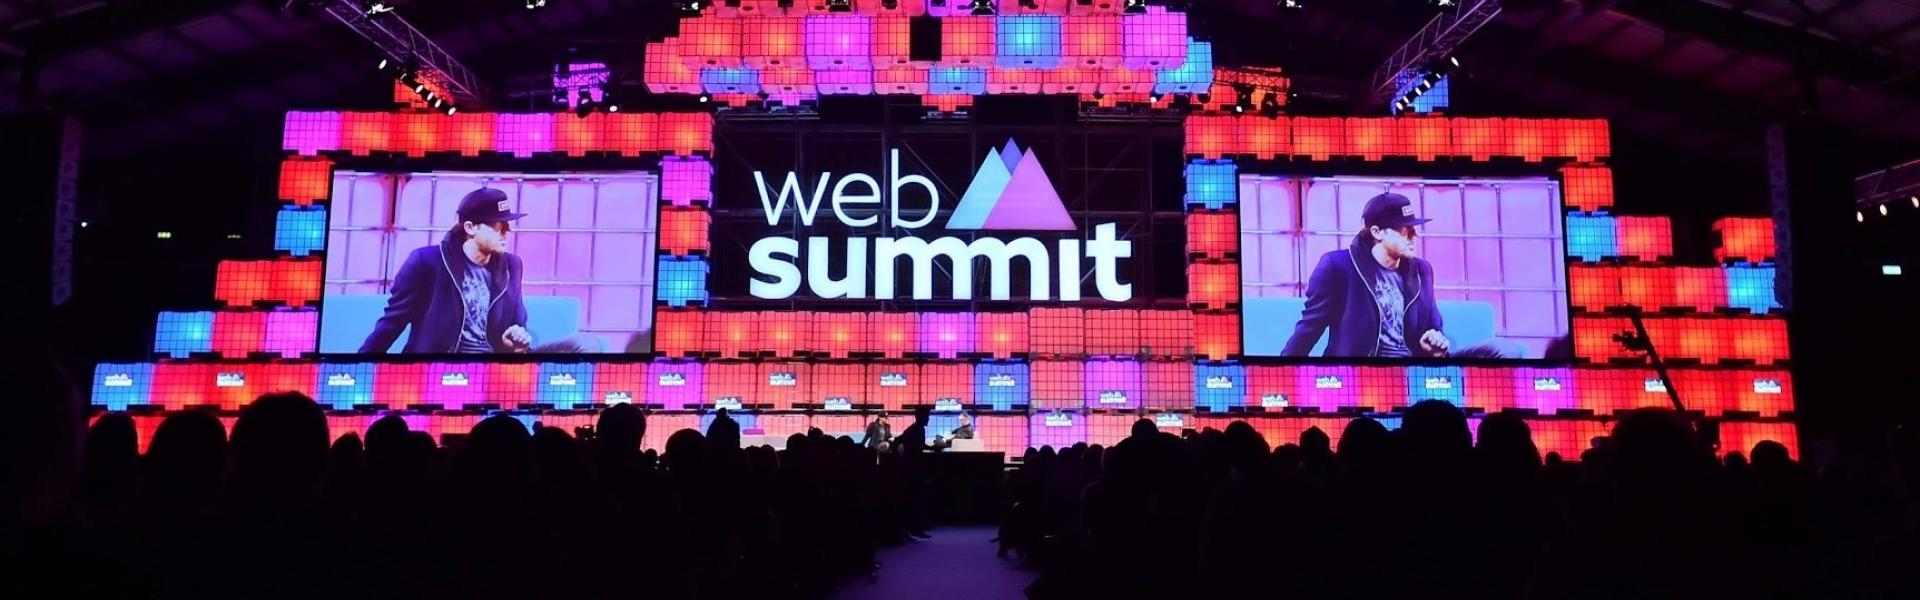 VISEO at the Web Summit 2019